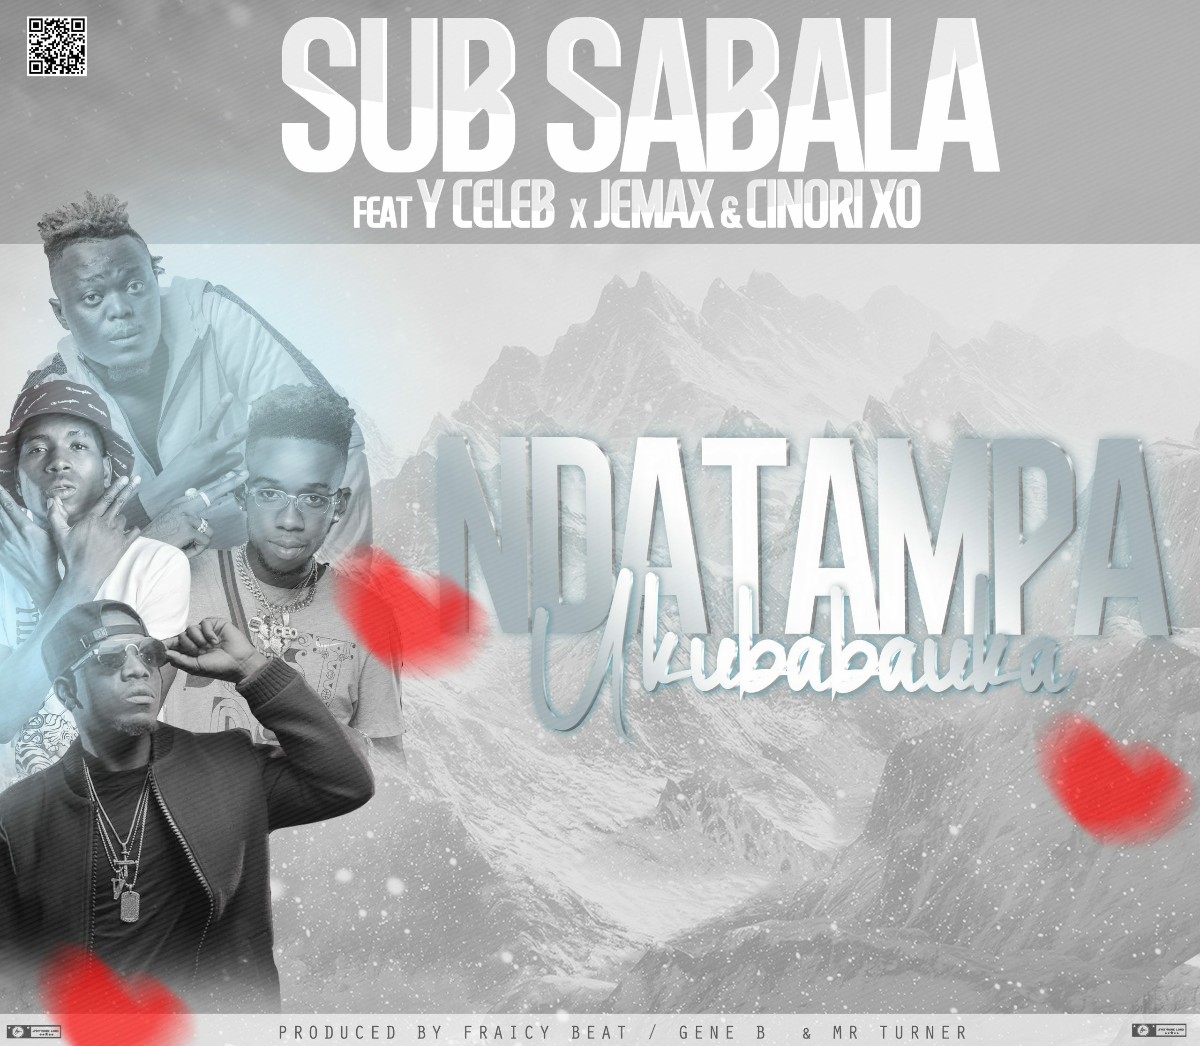 Sub Sabala ft. Y Celeb, Jemax & Cinori Xo - Ndatampa Ukubabauka